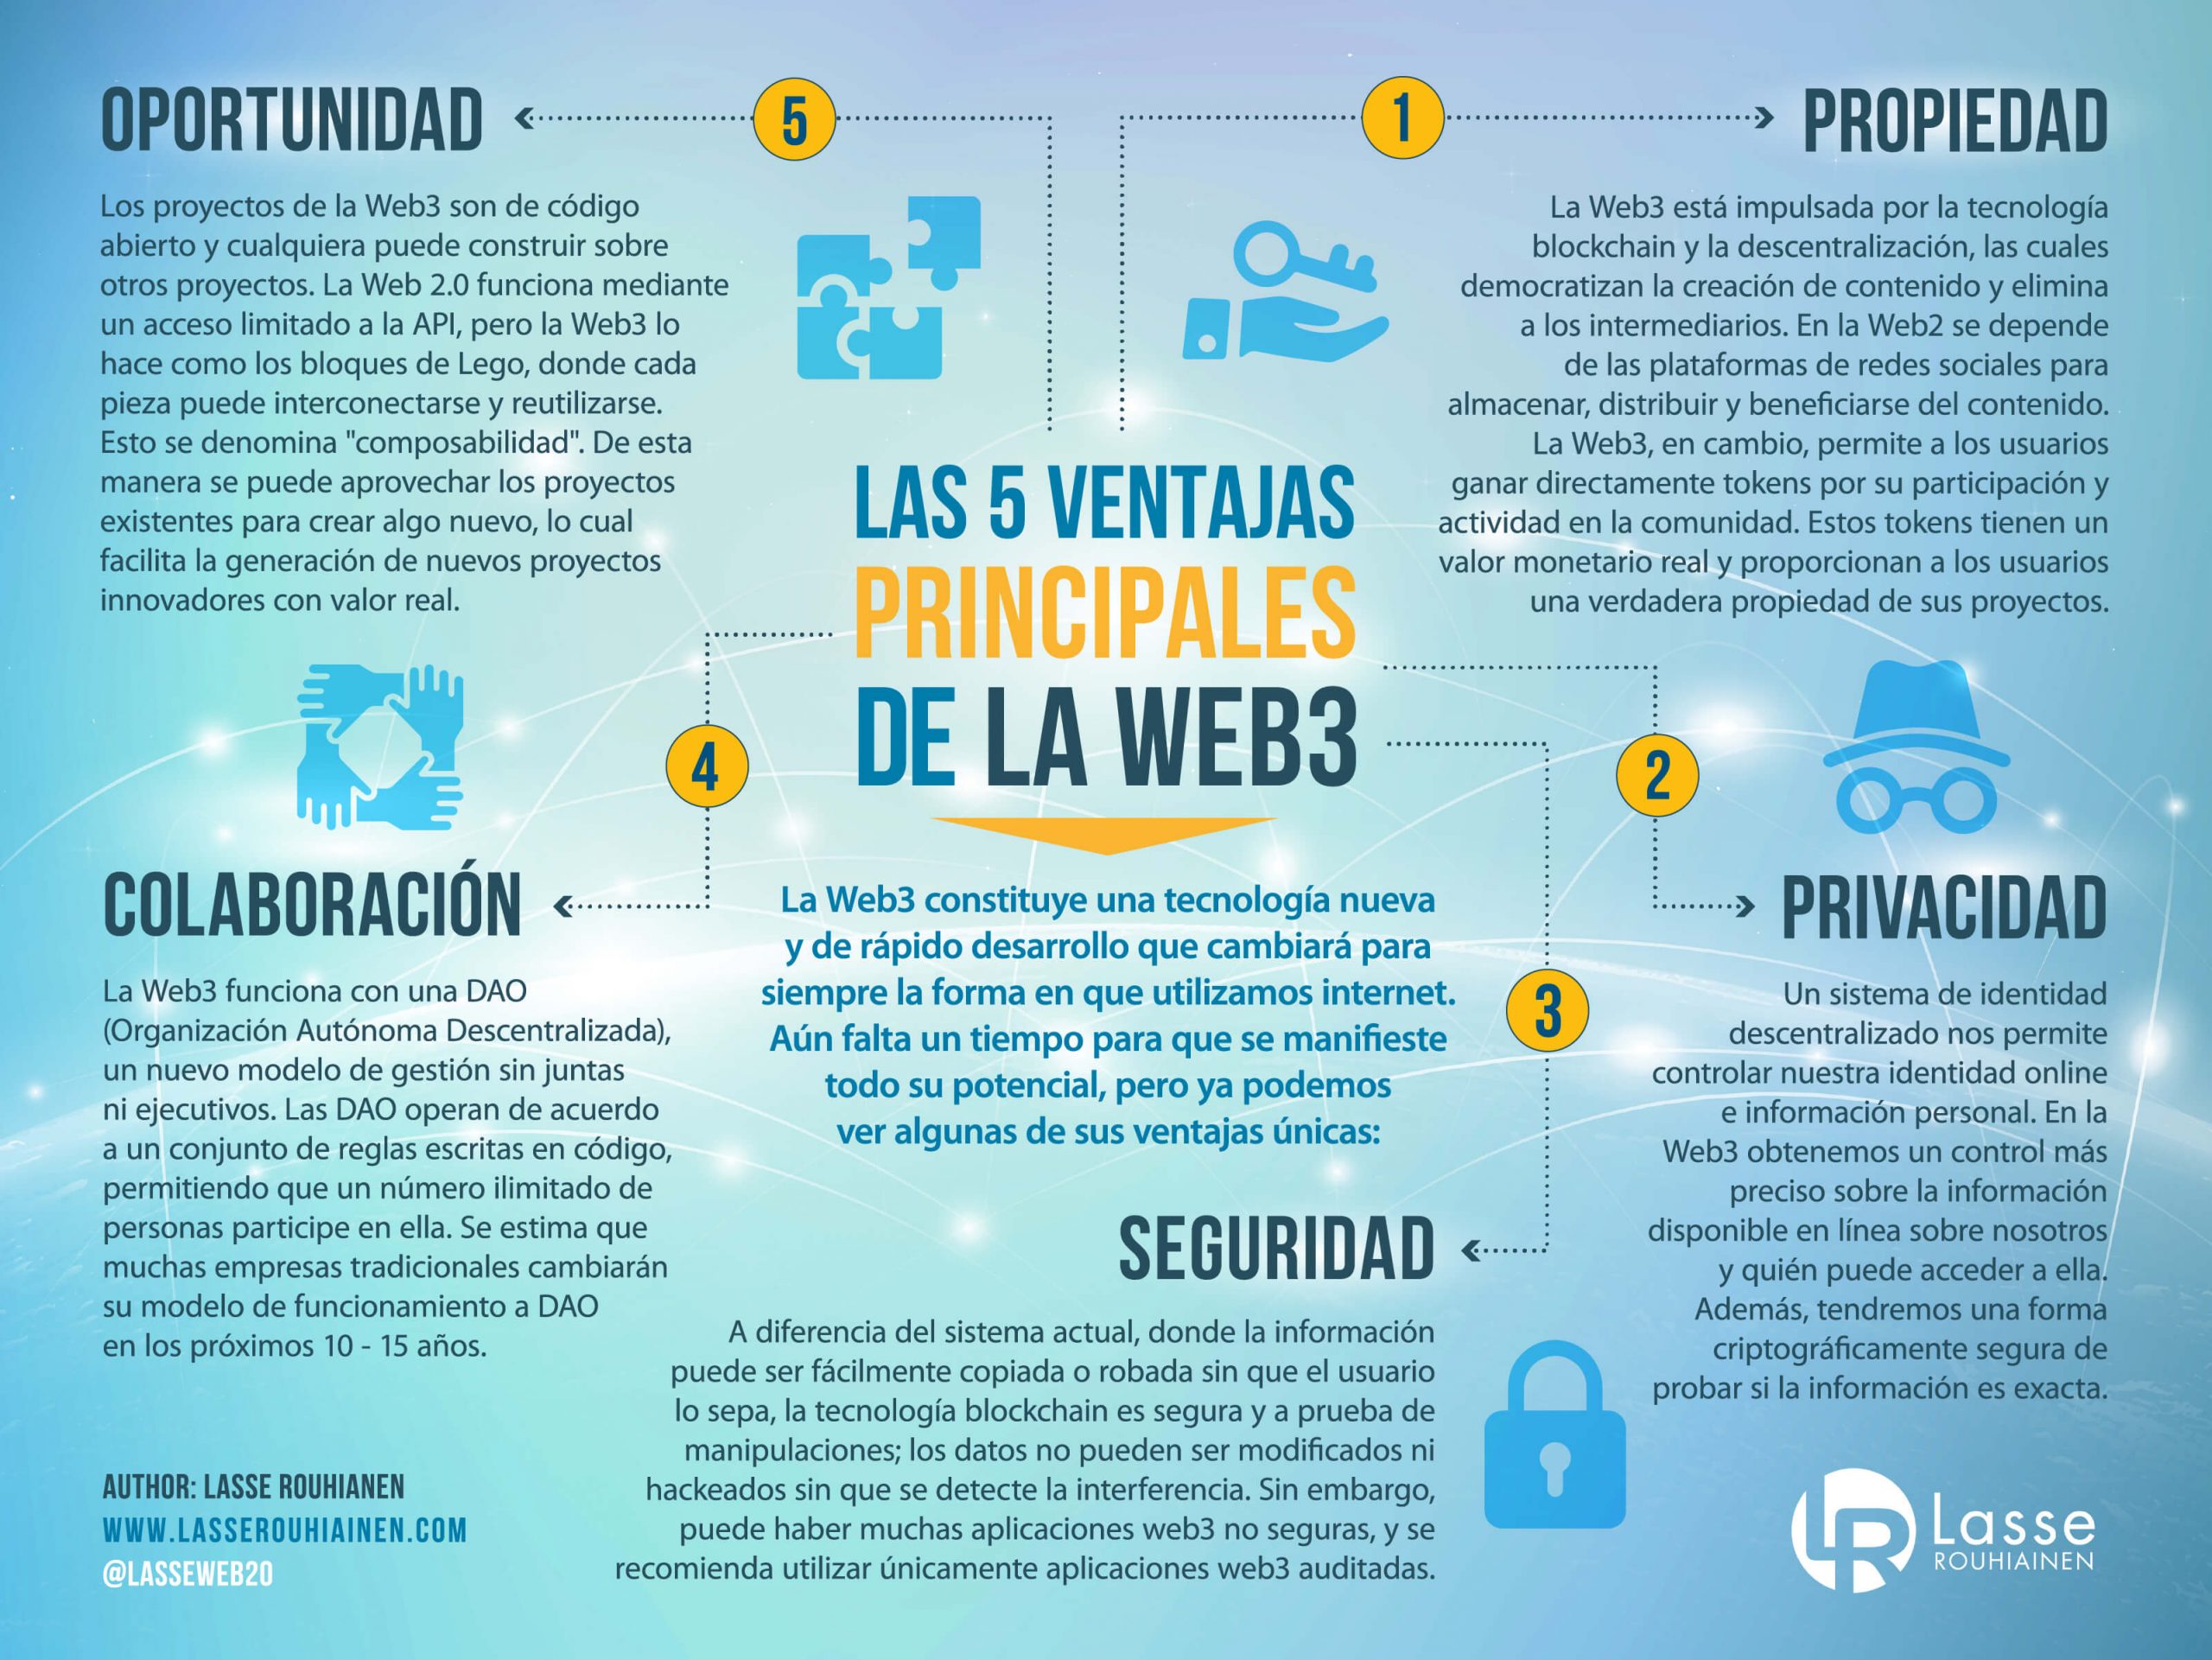 5 ventajas principales de la Web3 #infografia #infographic #internet